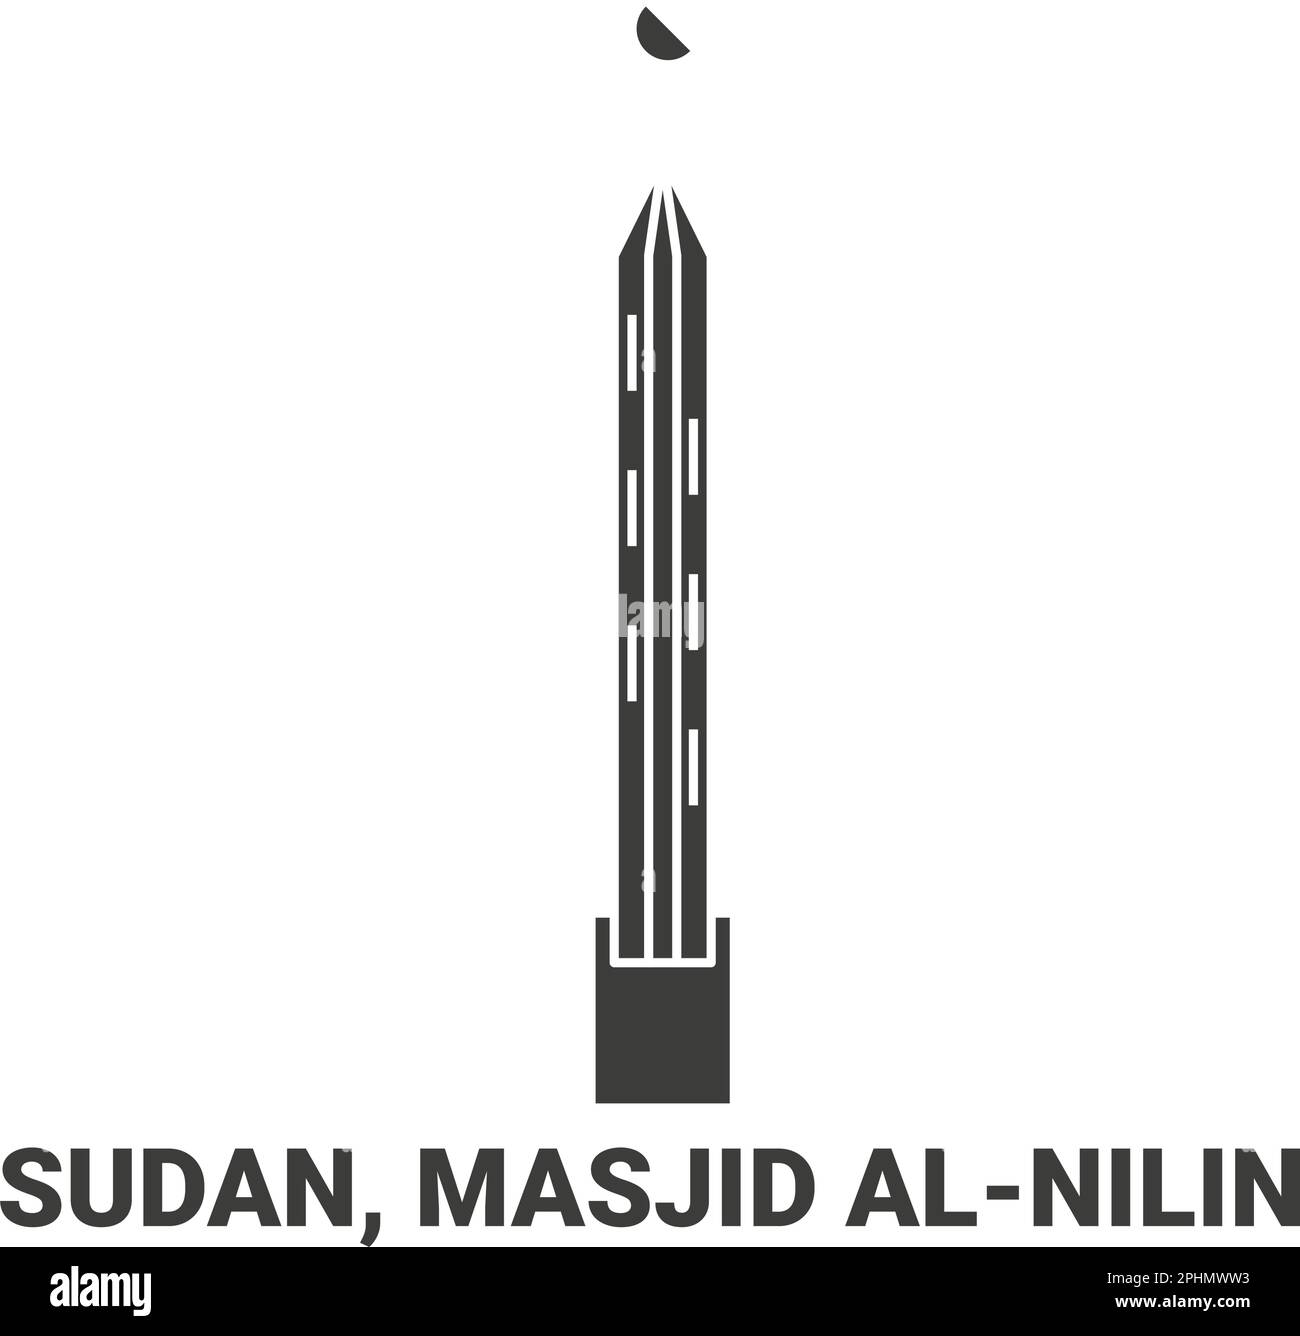 Sudan, Masjid Alnilin, travel landmark vector illustration Stock Vector